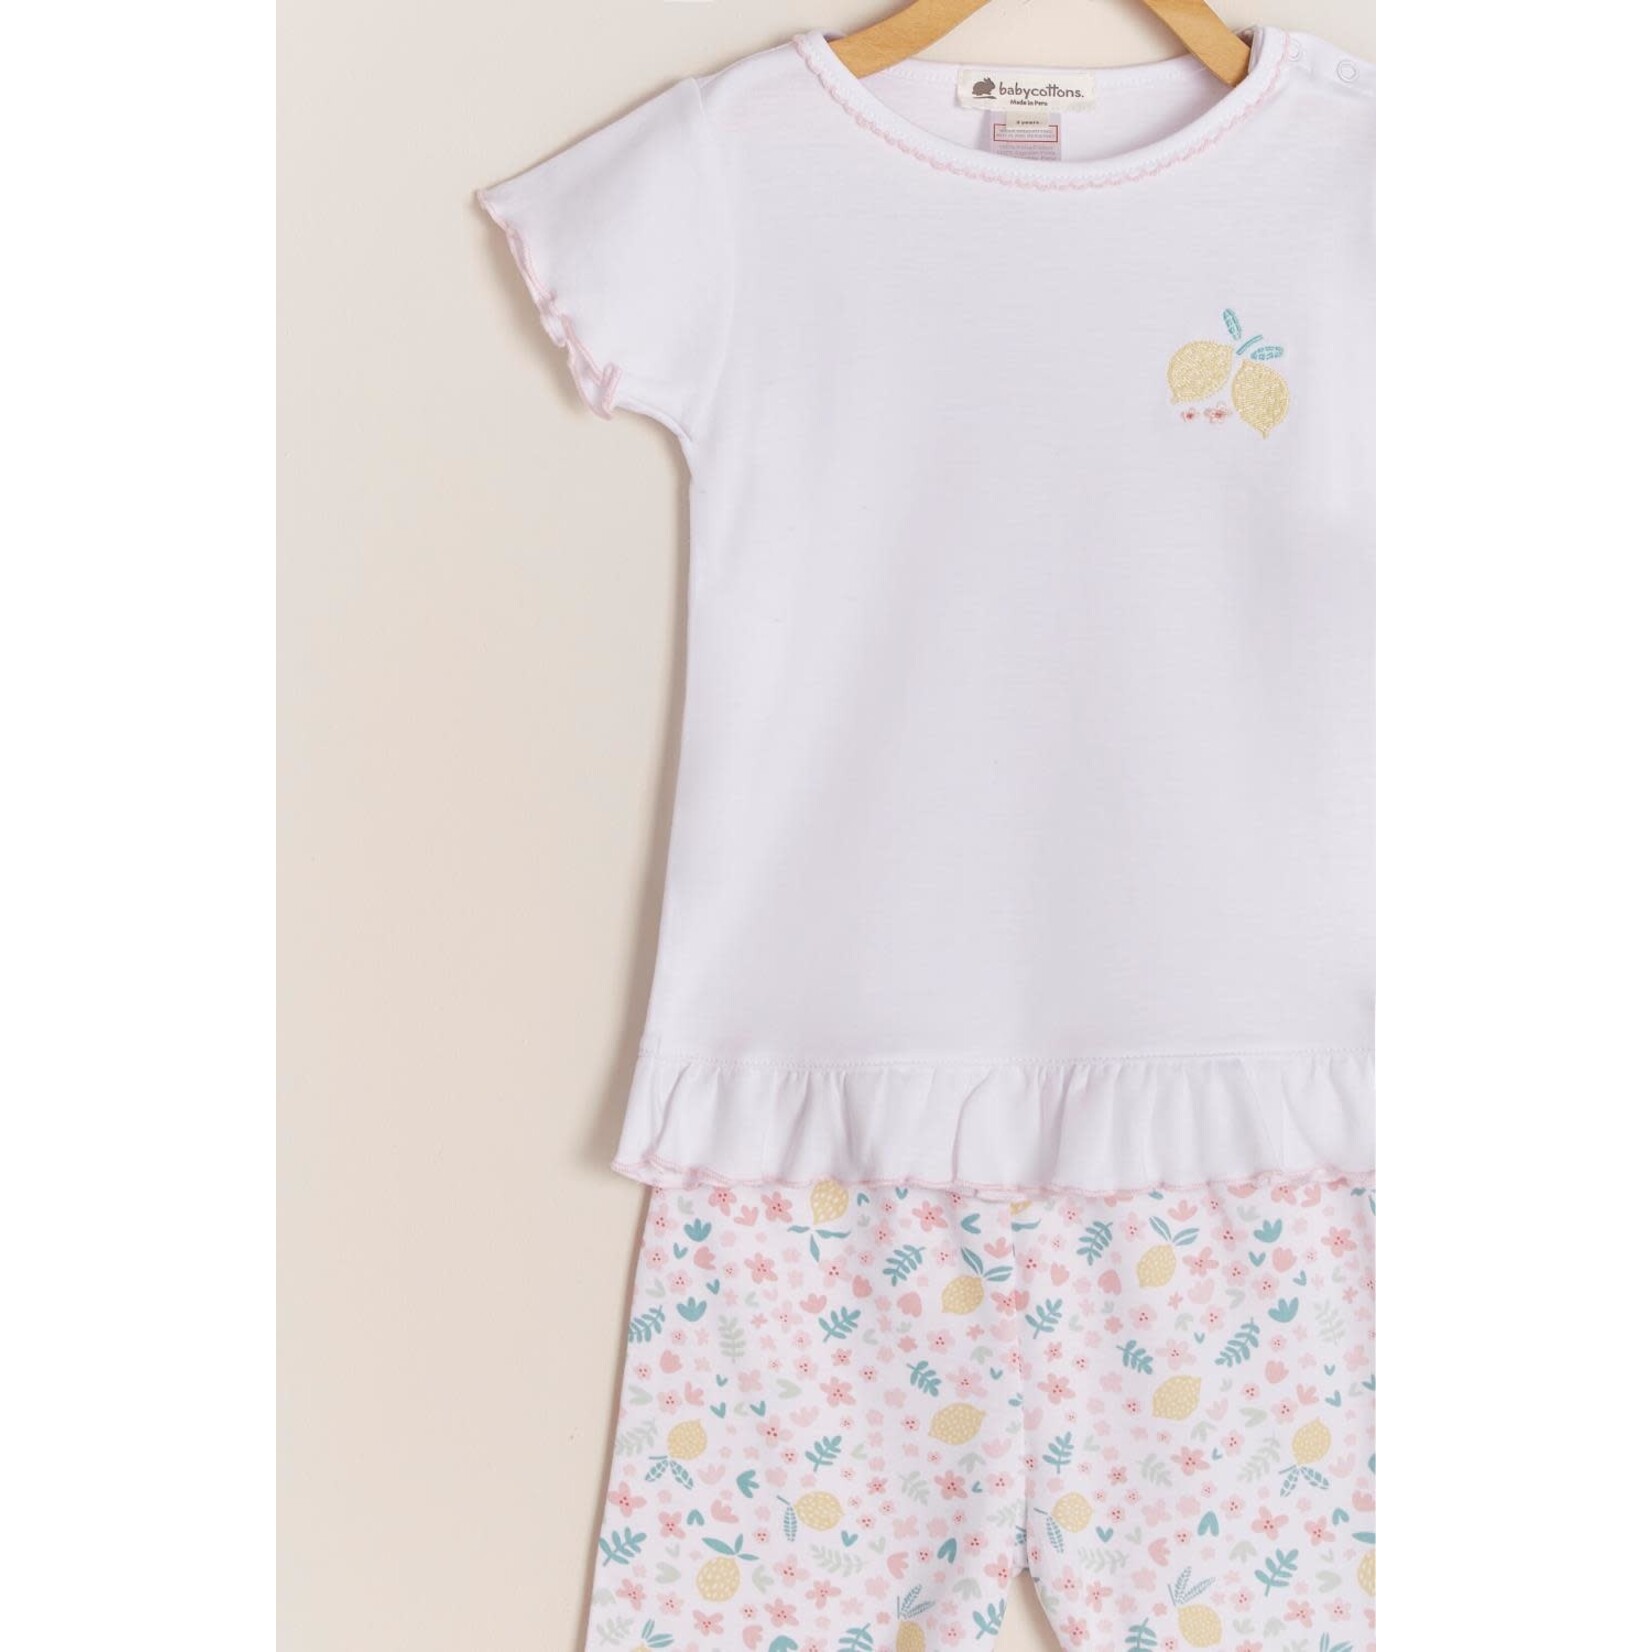 Babycottons Lemon Snug Short Pajama